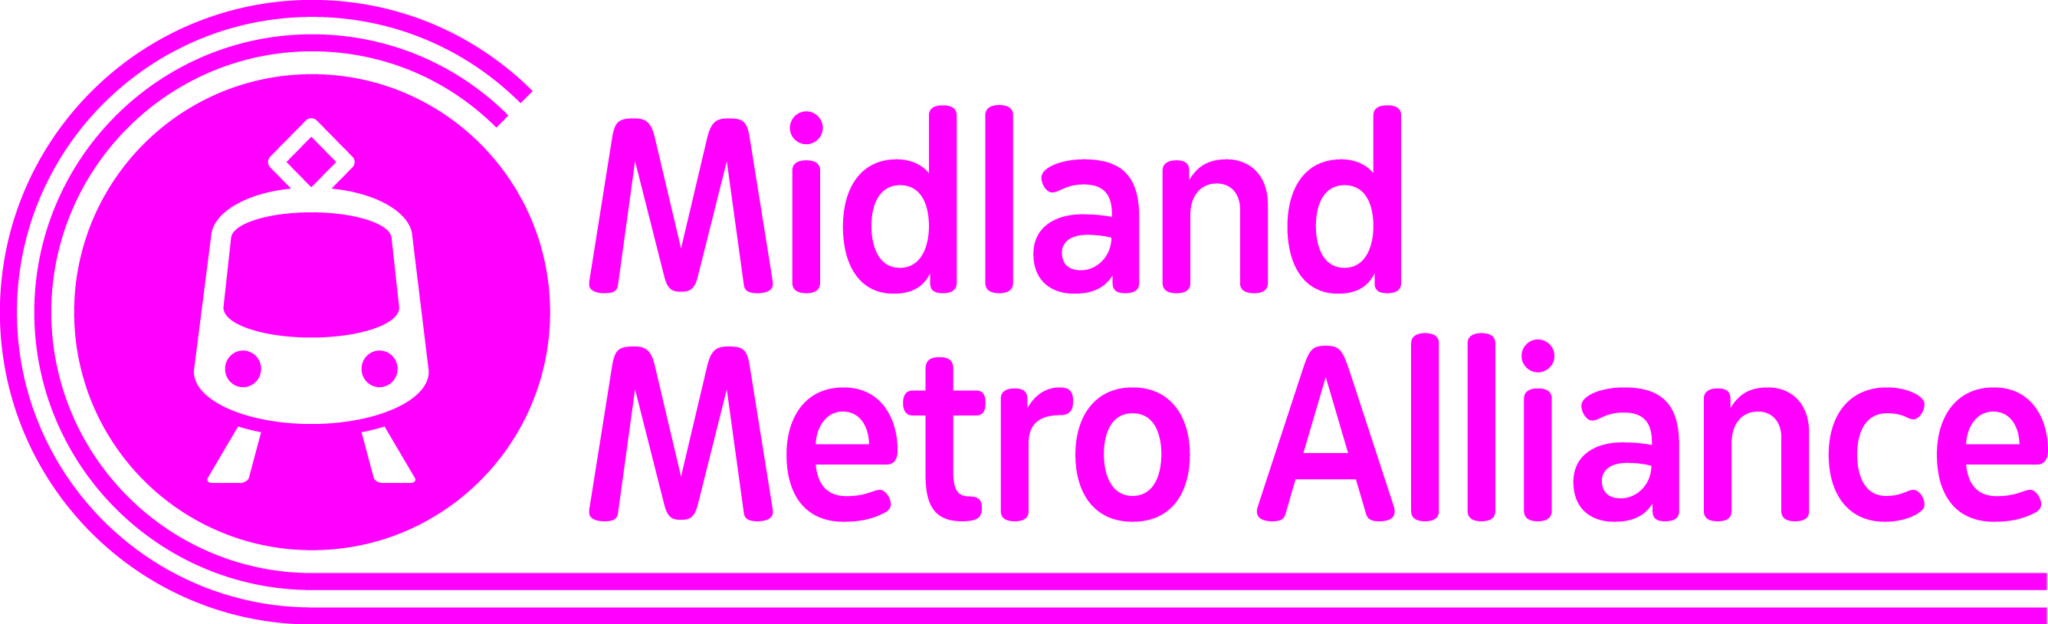 Midland Metro Alliance logo